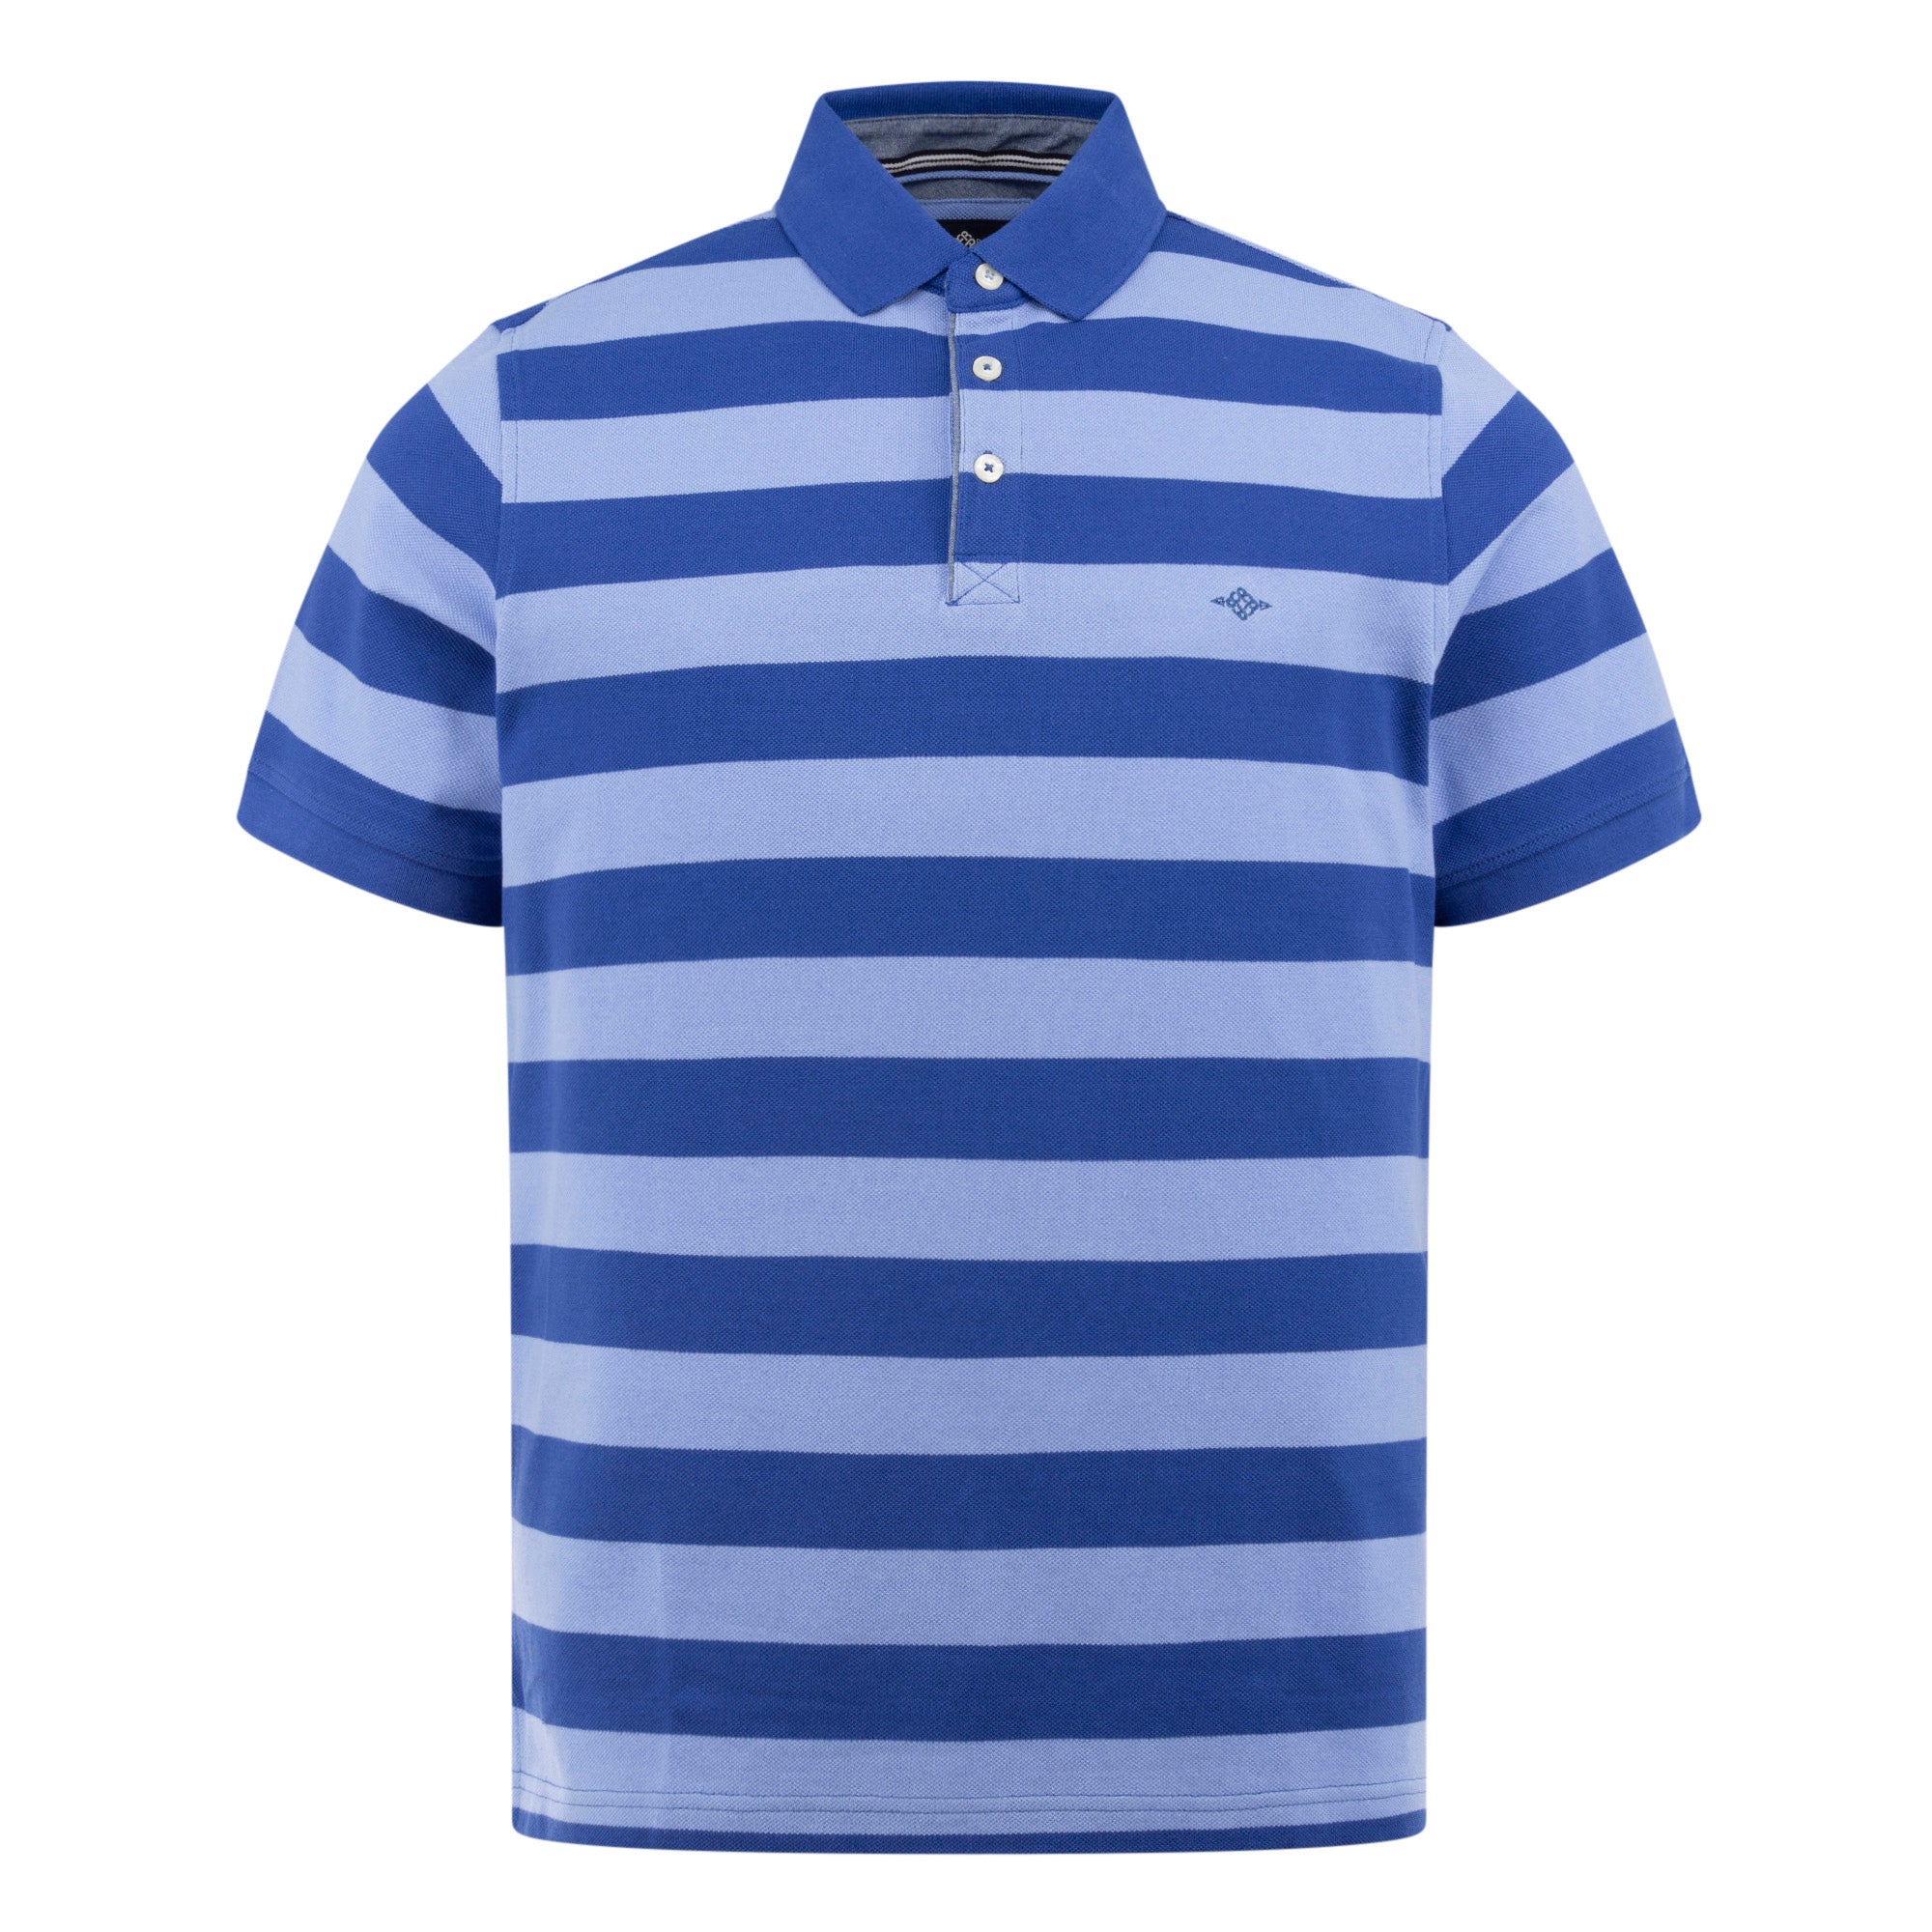 Striped polo shirt 315208